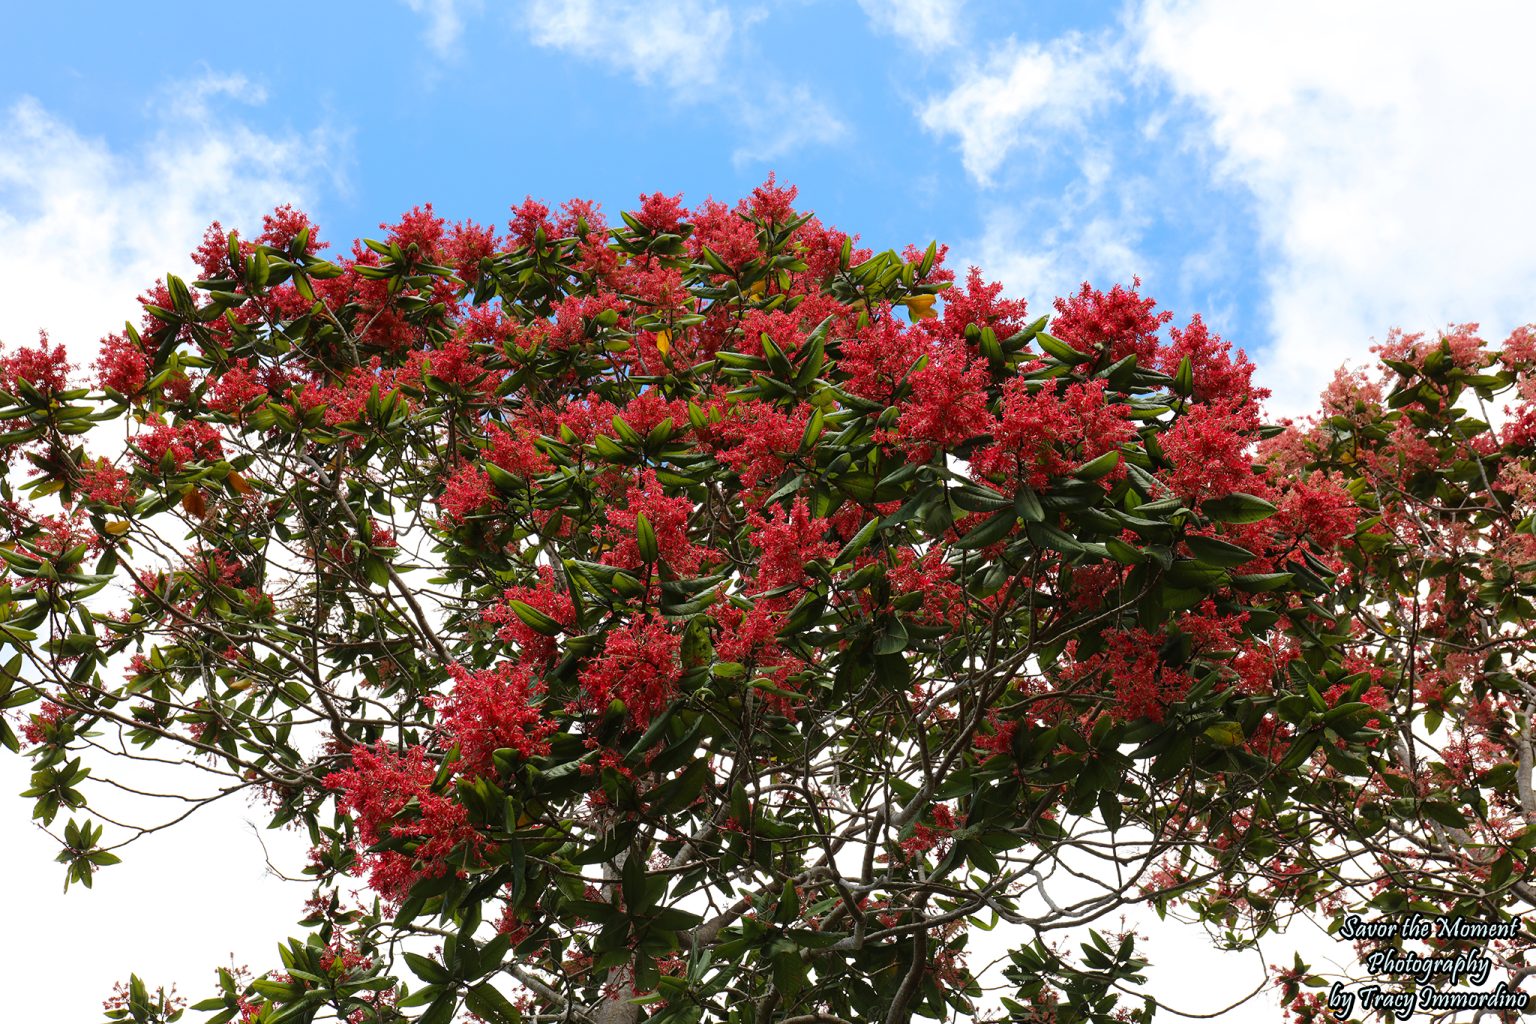 Visiting the McBryde Gardens in Kauai - Savor the Moment Photography